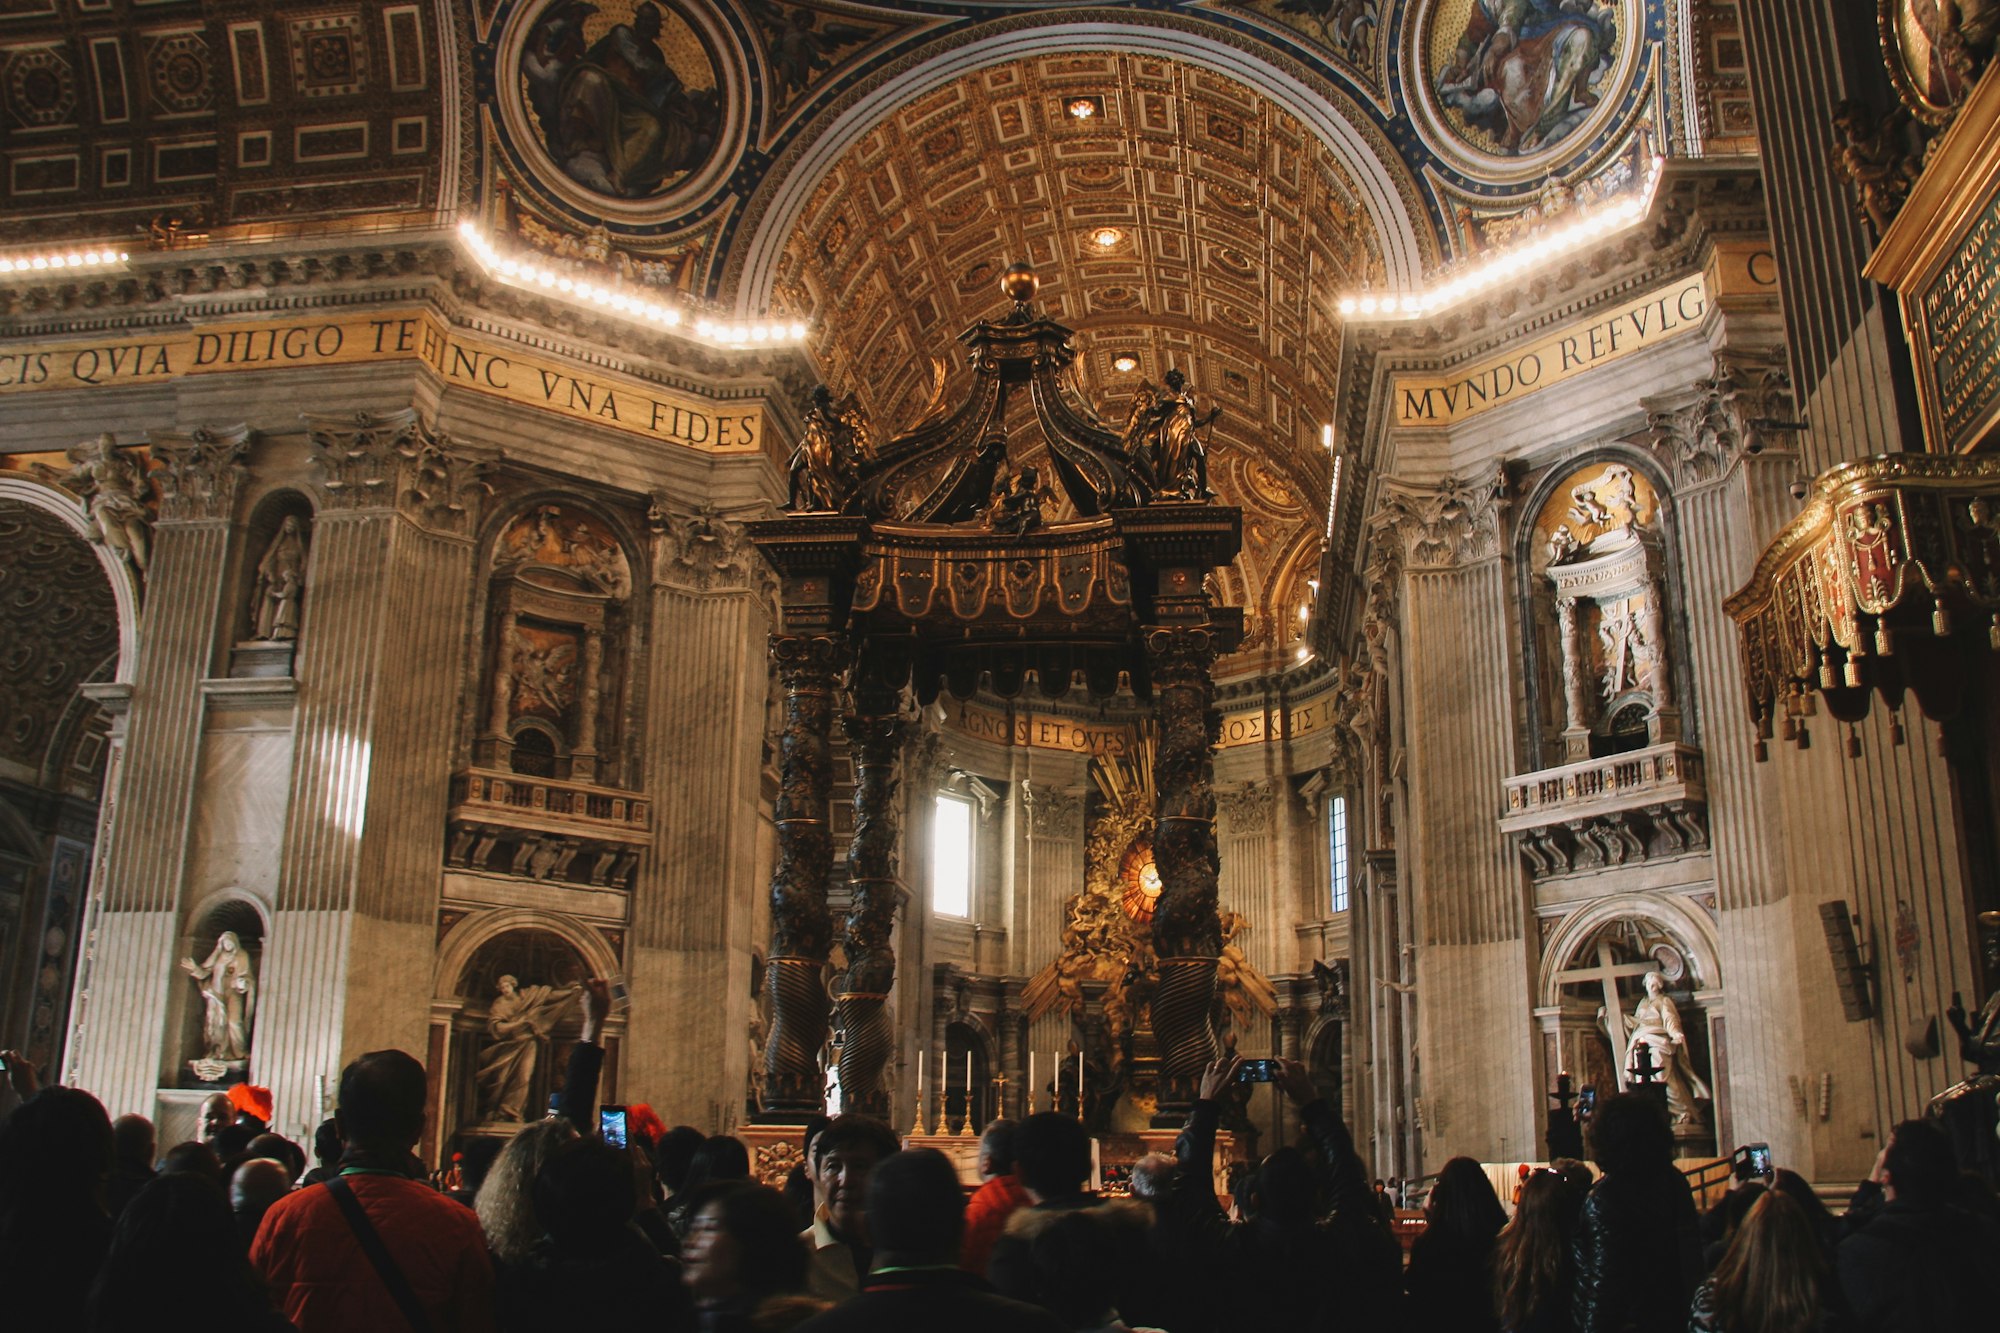 Inside St. Peter's Basilica in Vatican city